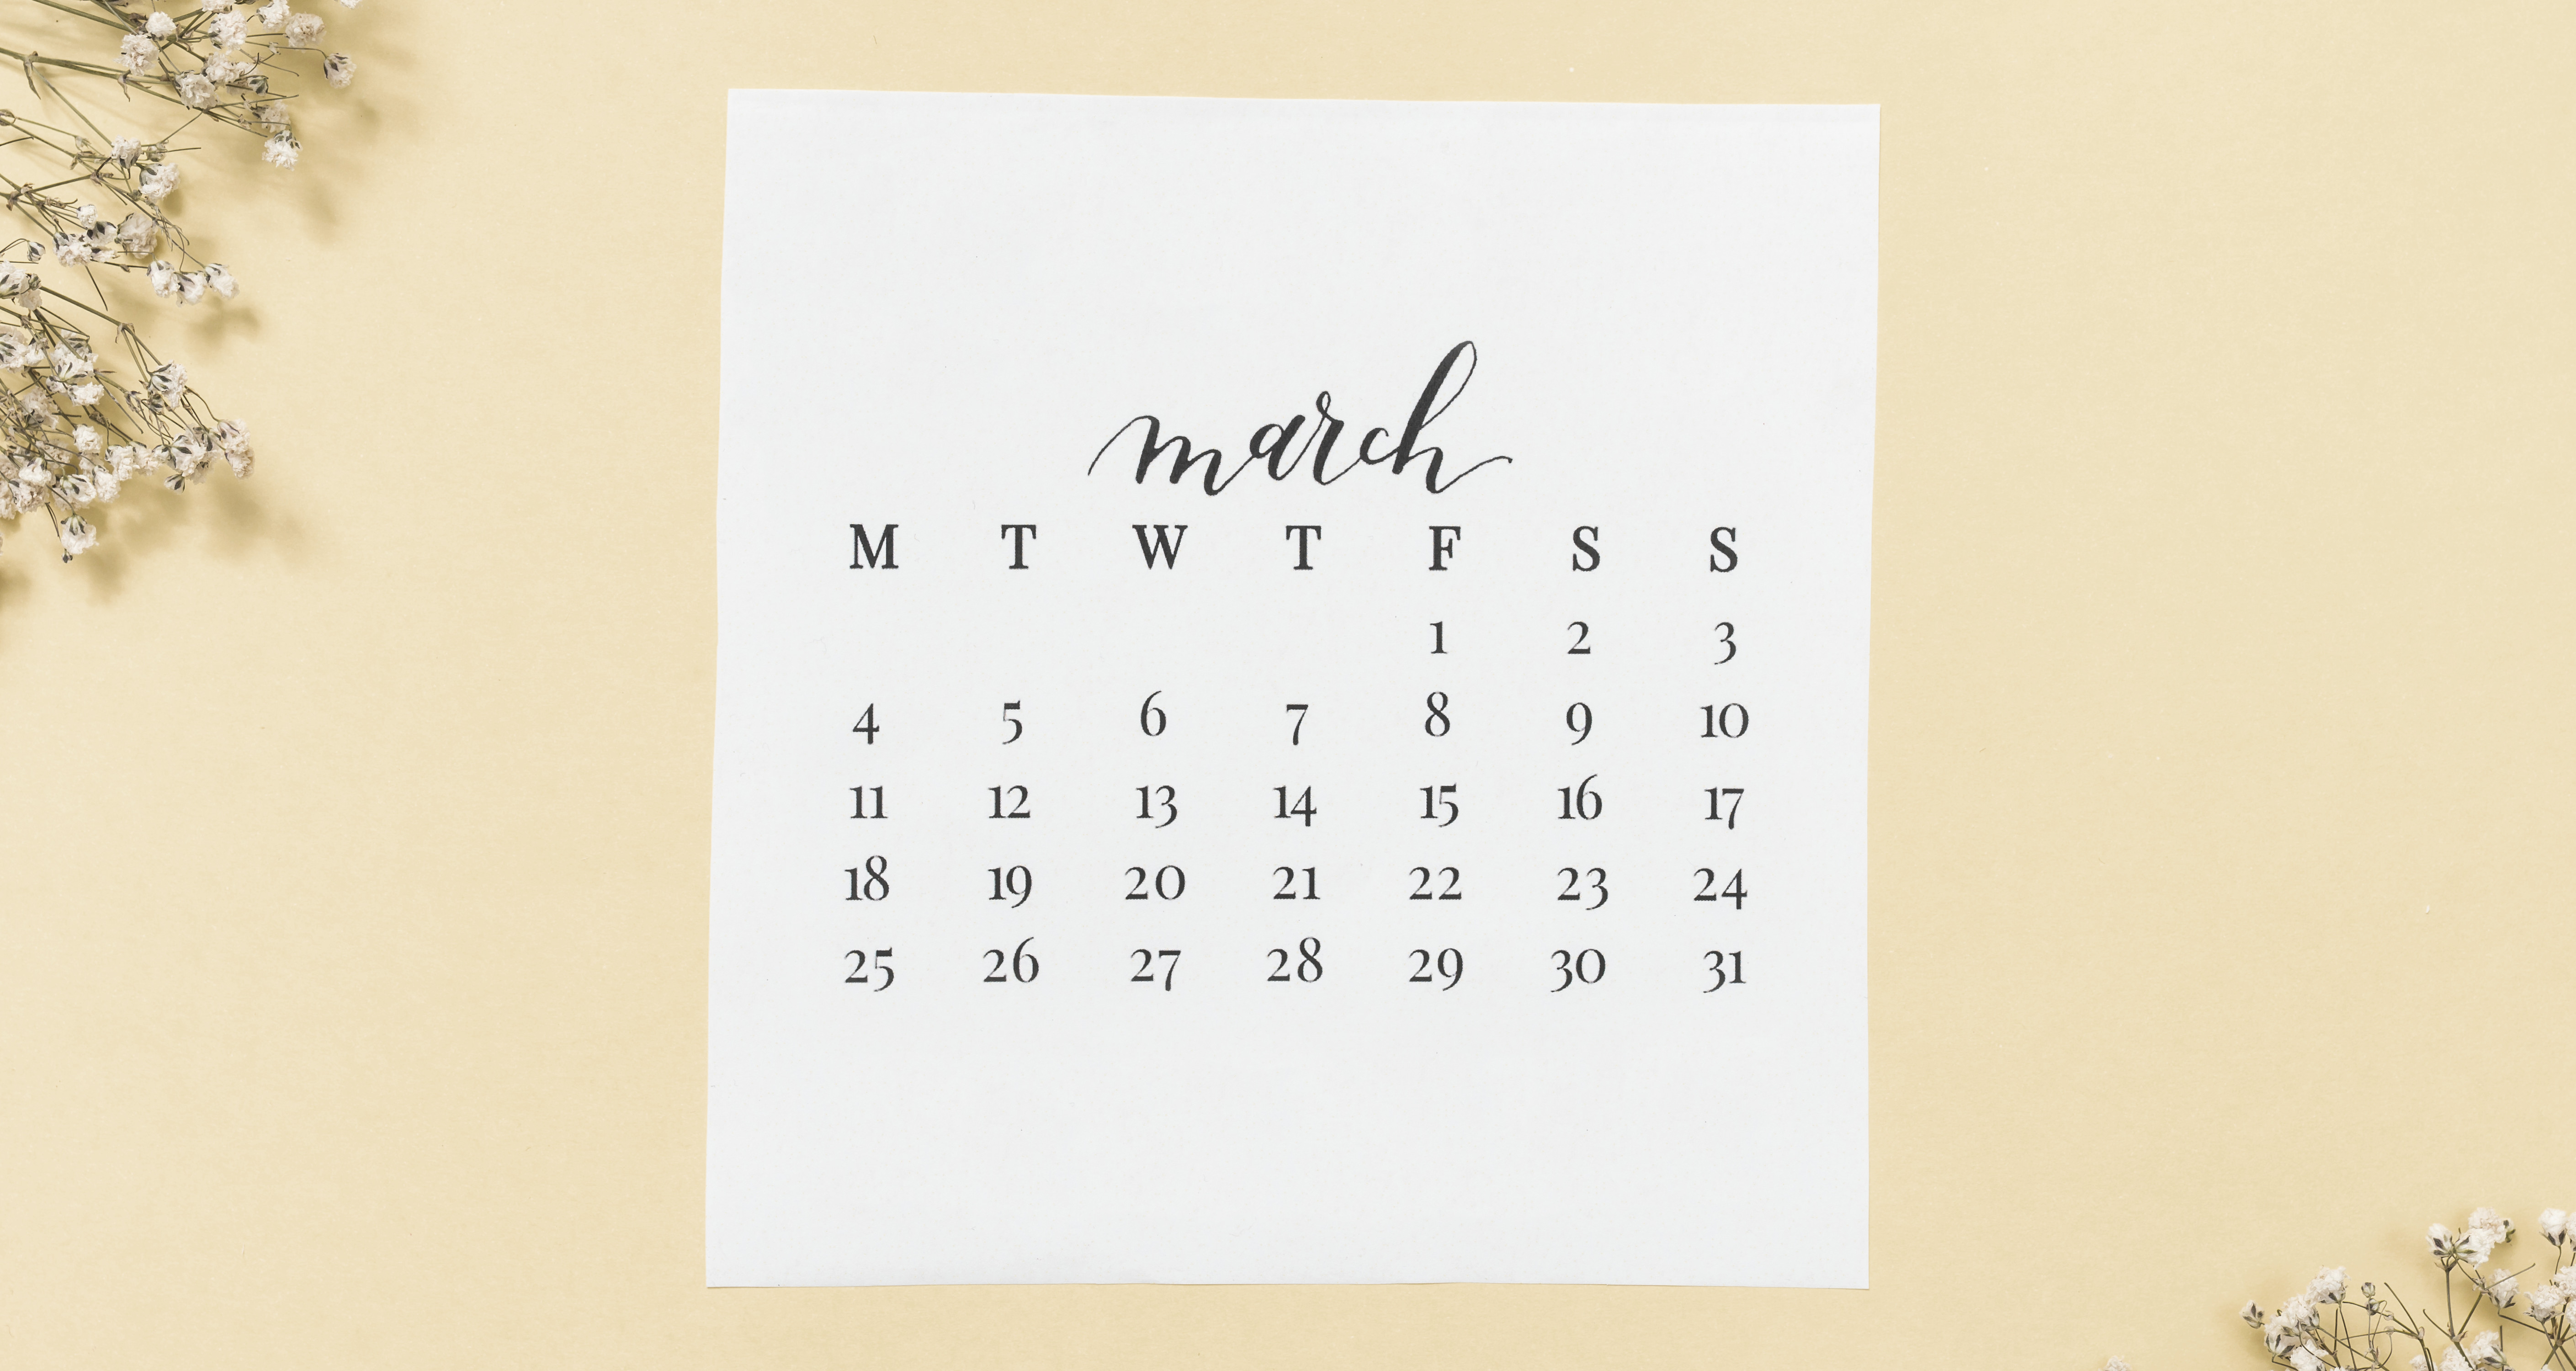 March calendar. Календарь март. Настенный календарь март. Календарь на март красивые картинки. Мартовский календарный стиль.